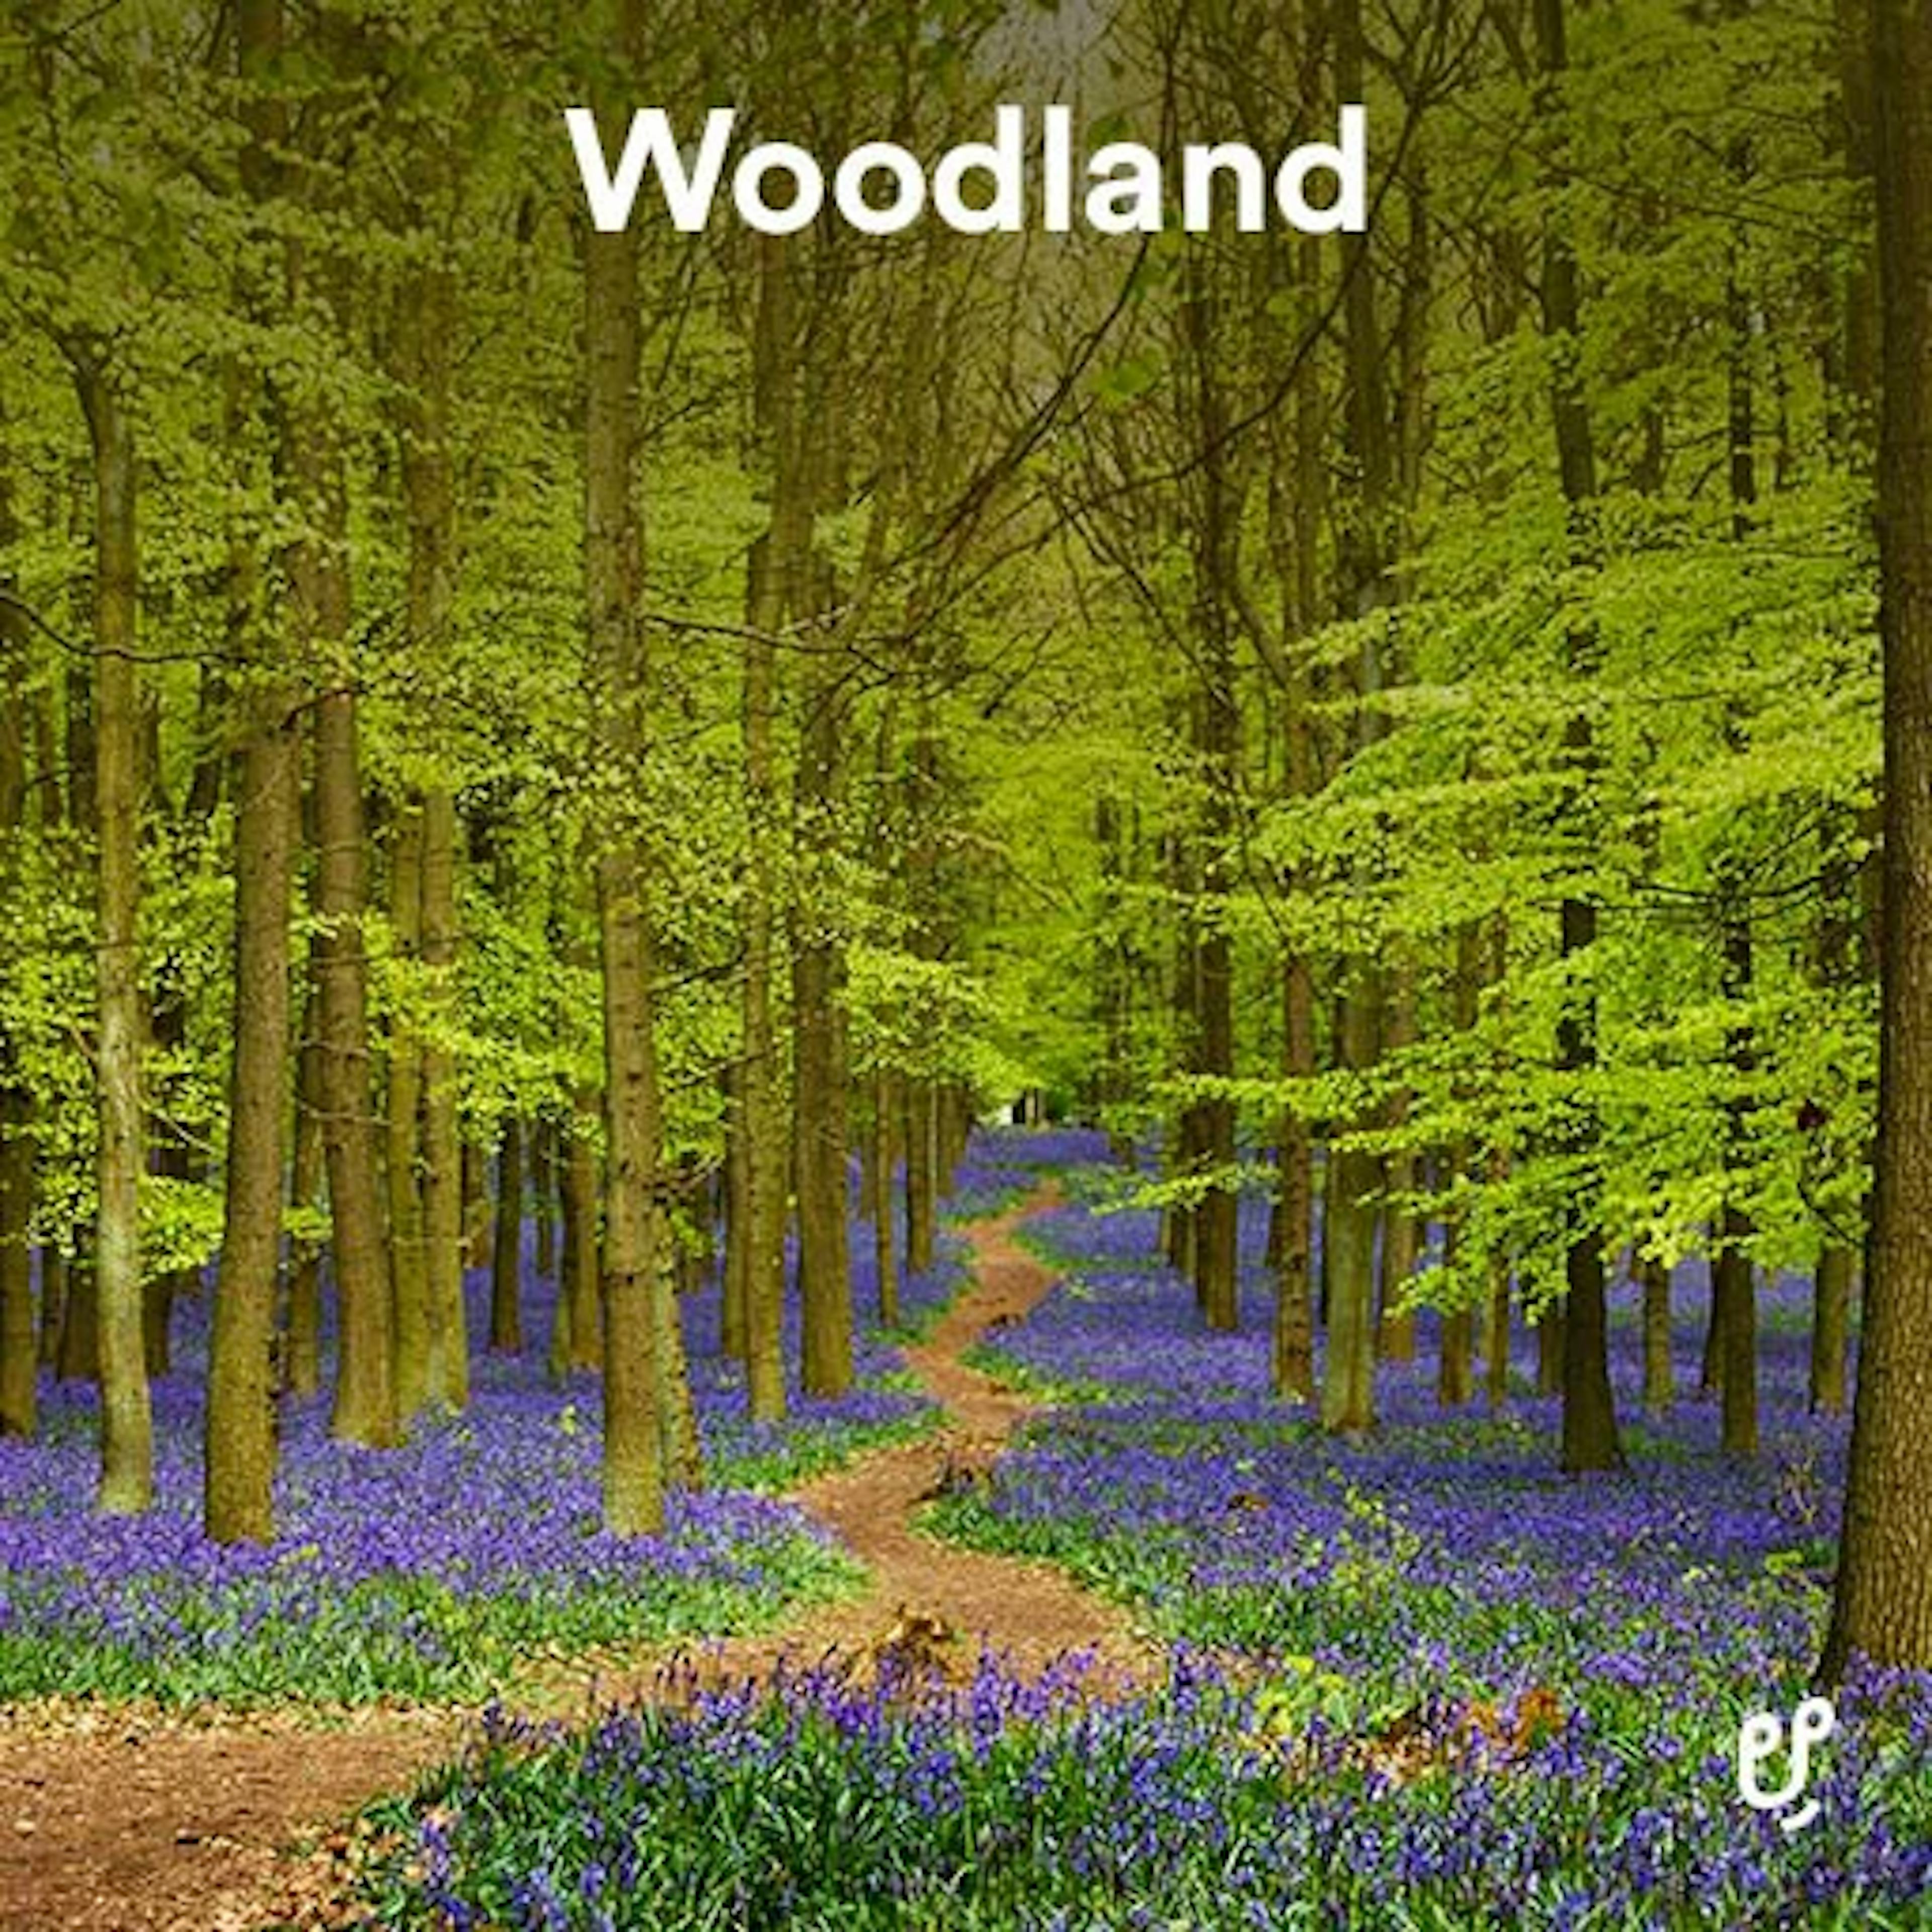 Woodland artwork